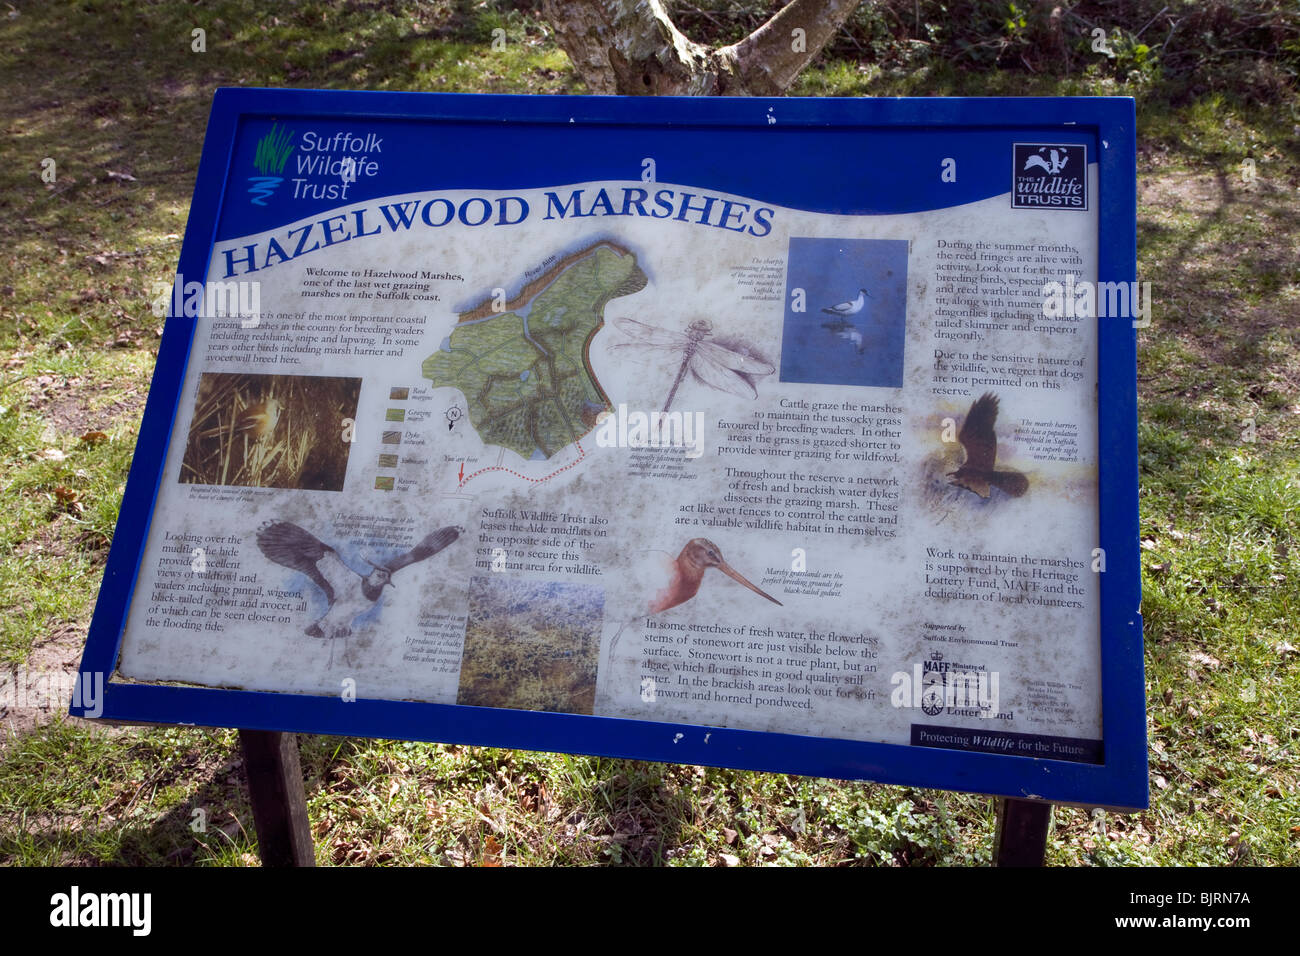 Hazelwood Marshes Suffolk Wildlife Trust information board, Aldeburgh, Sufolk Stock Photo